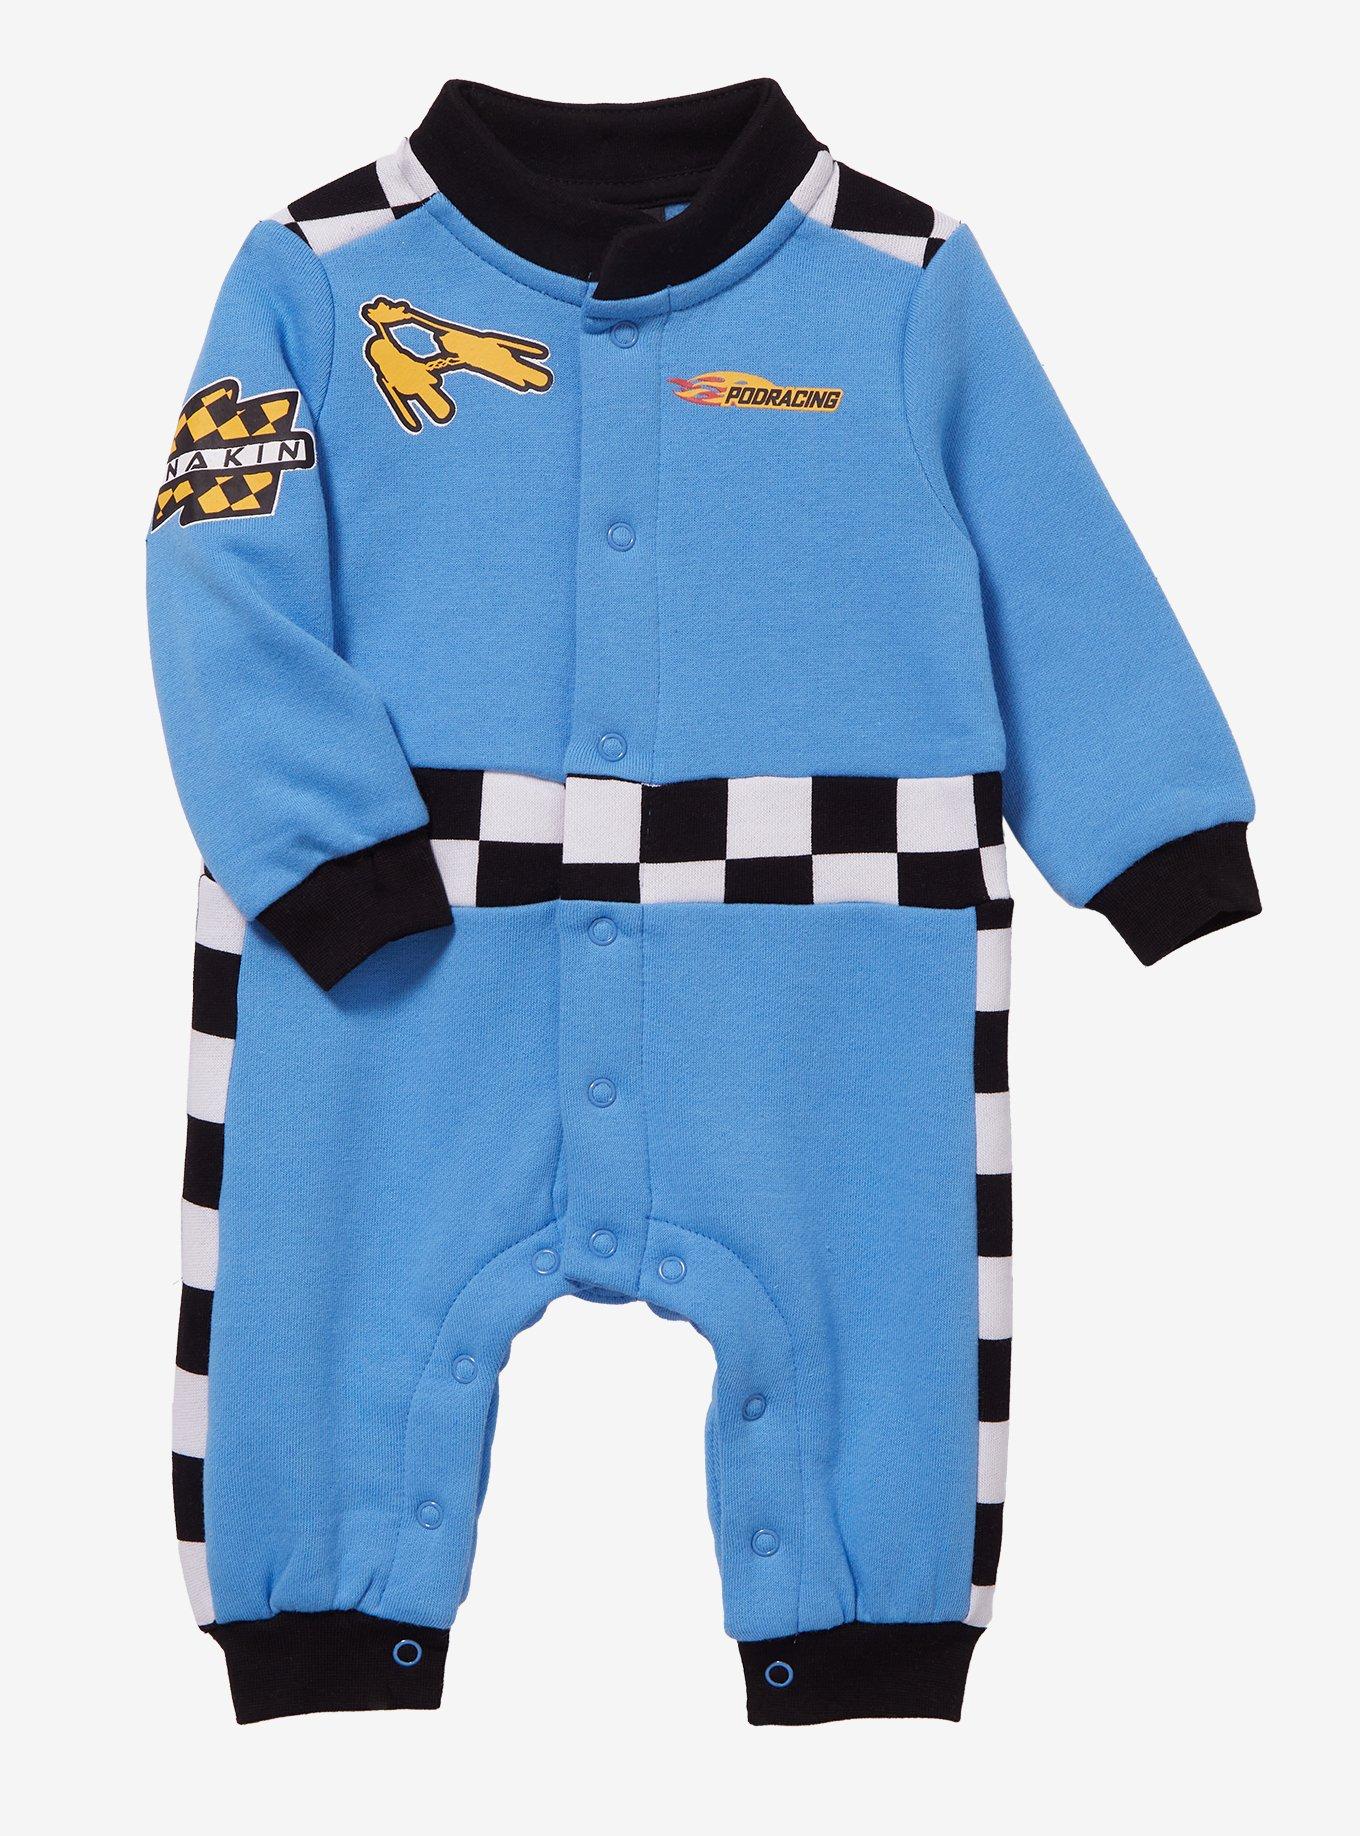 Star Wars Podracing Racing Suit Infant One-Piece - BoxLunch Exclusive, , hi-res